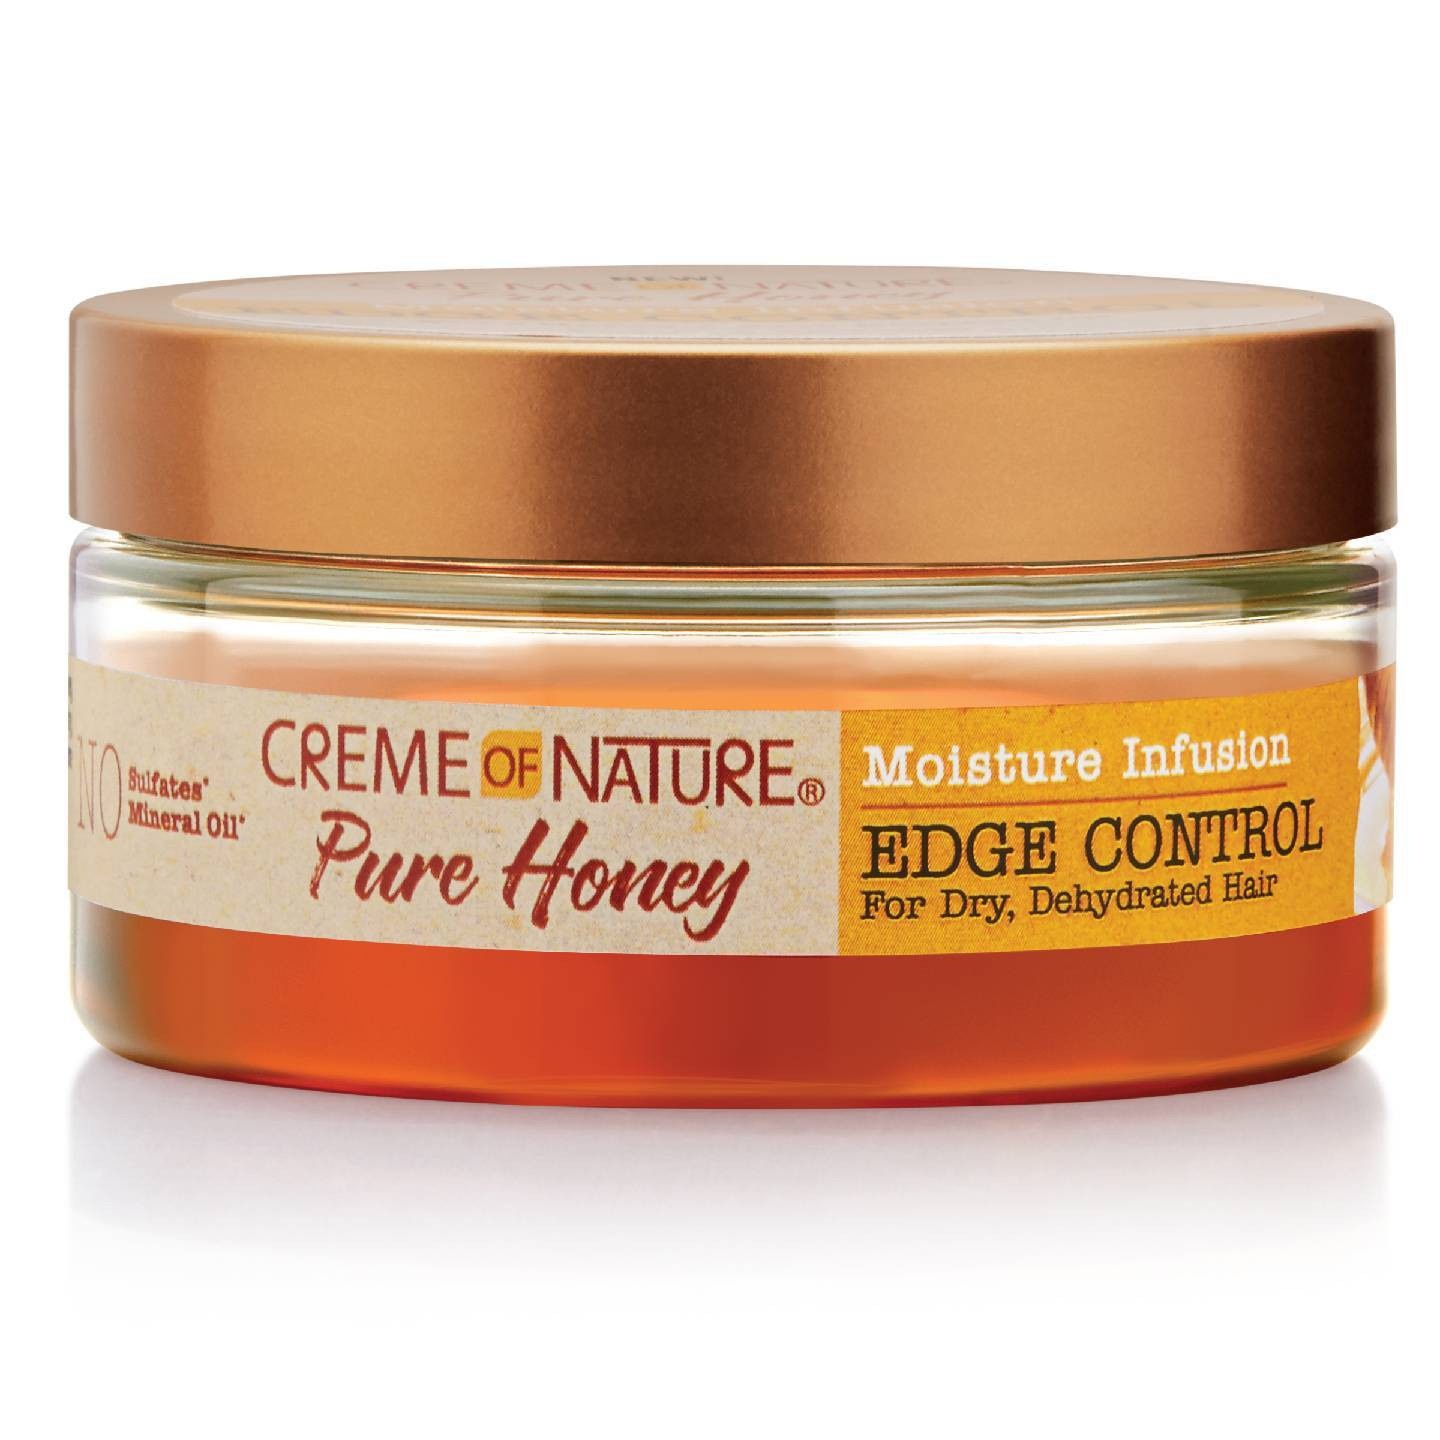 slide 1 of 4, Creme of Nature Pure Honey Moisture Infusion Edge Control, 2.25 fl oz